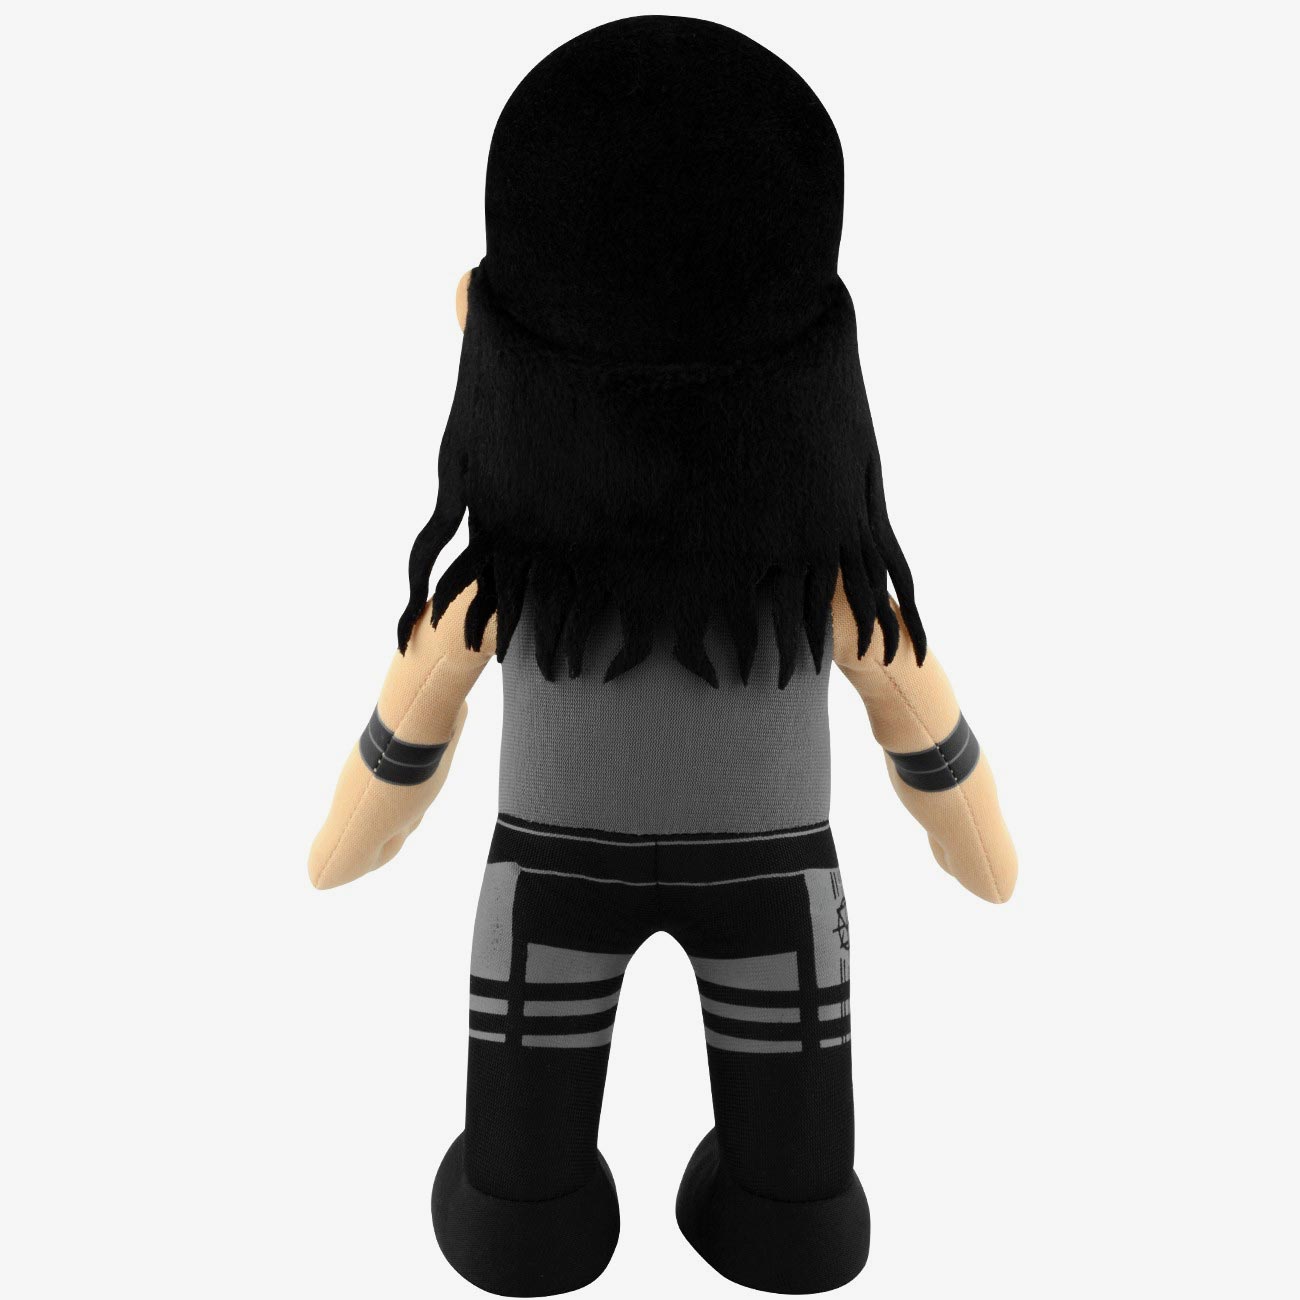 Seth Rollins 10" WWE Bleacher Creature (Black)